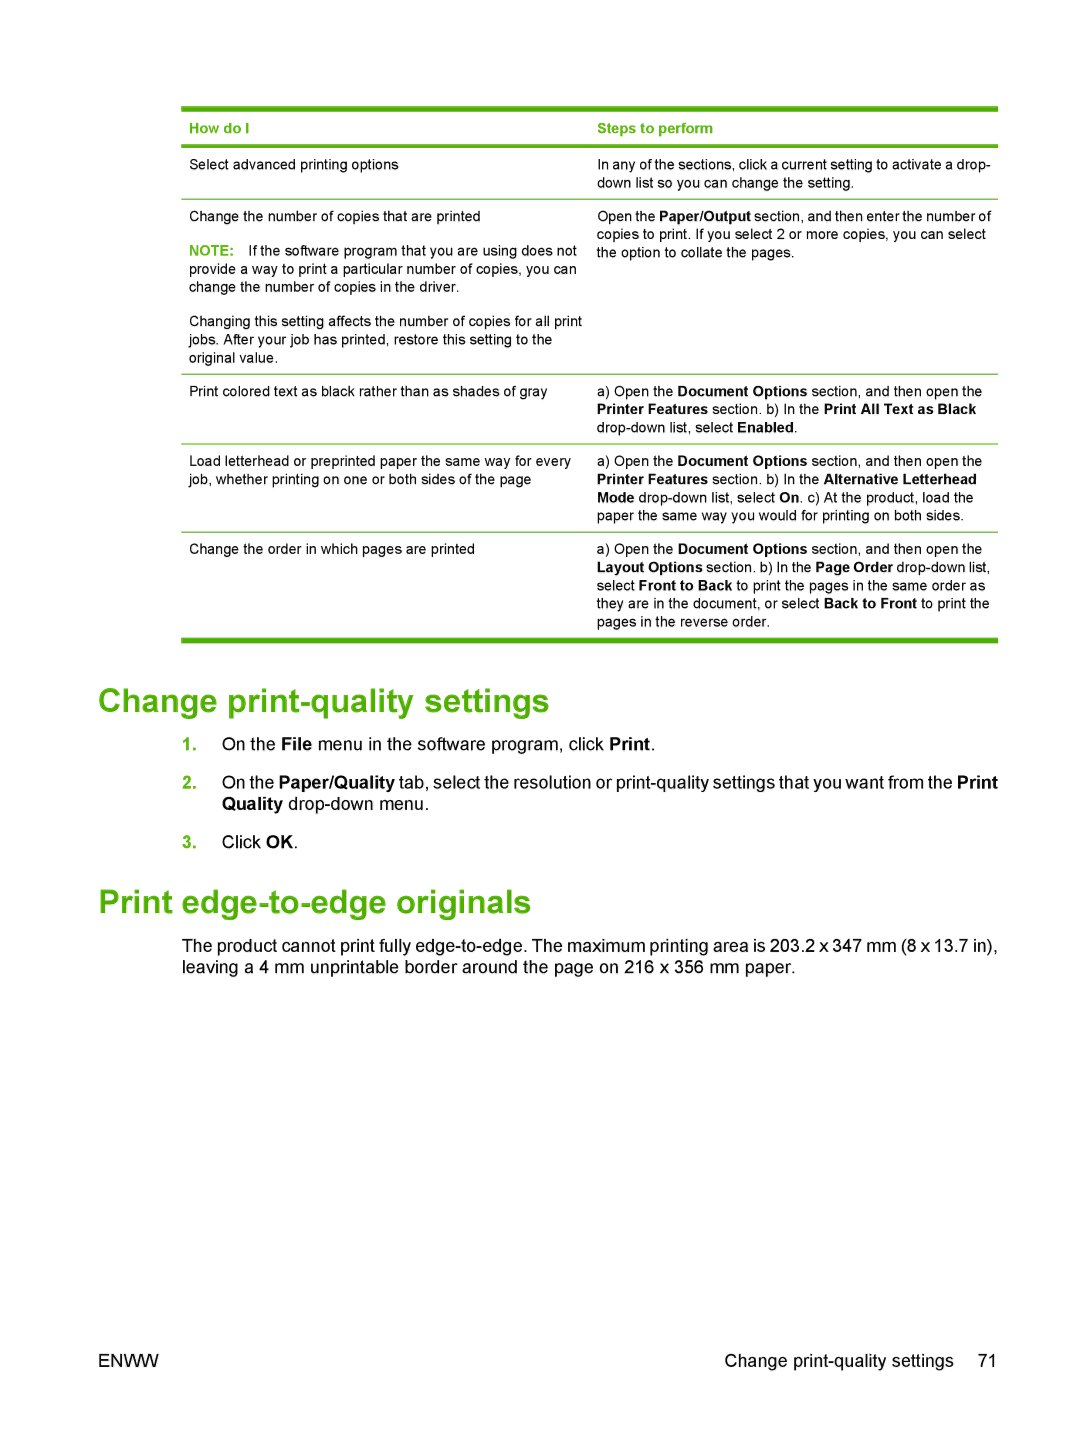 HP CM2320 manual Change print-quality settings, Print edge-to-edge originals 